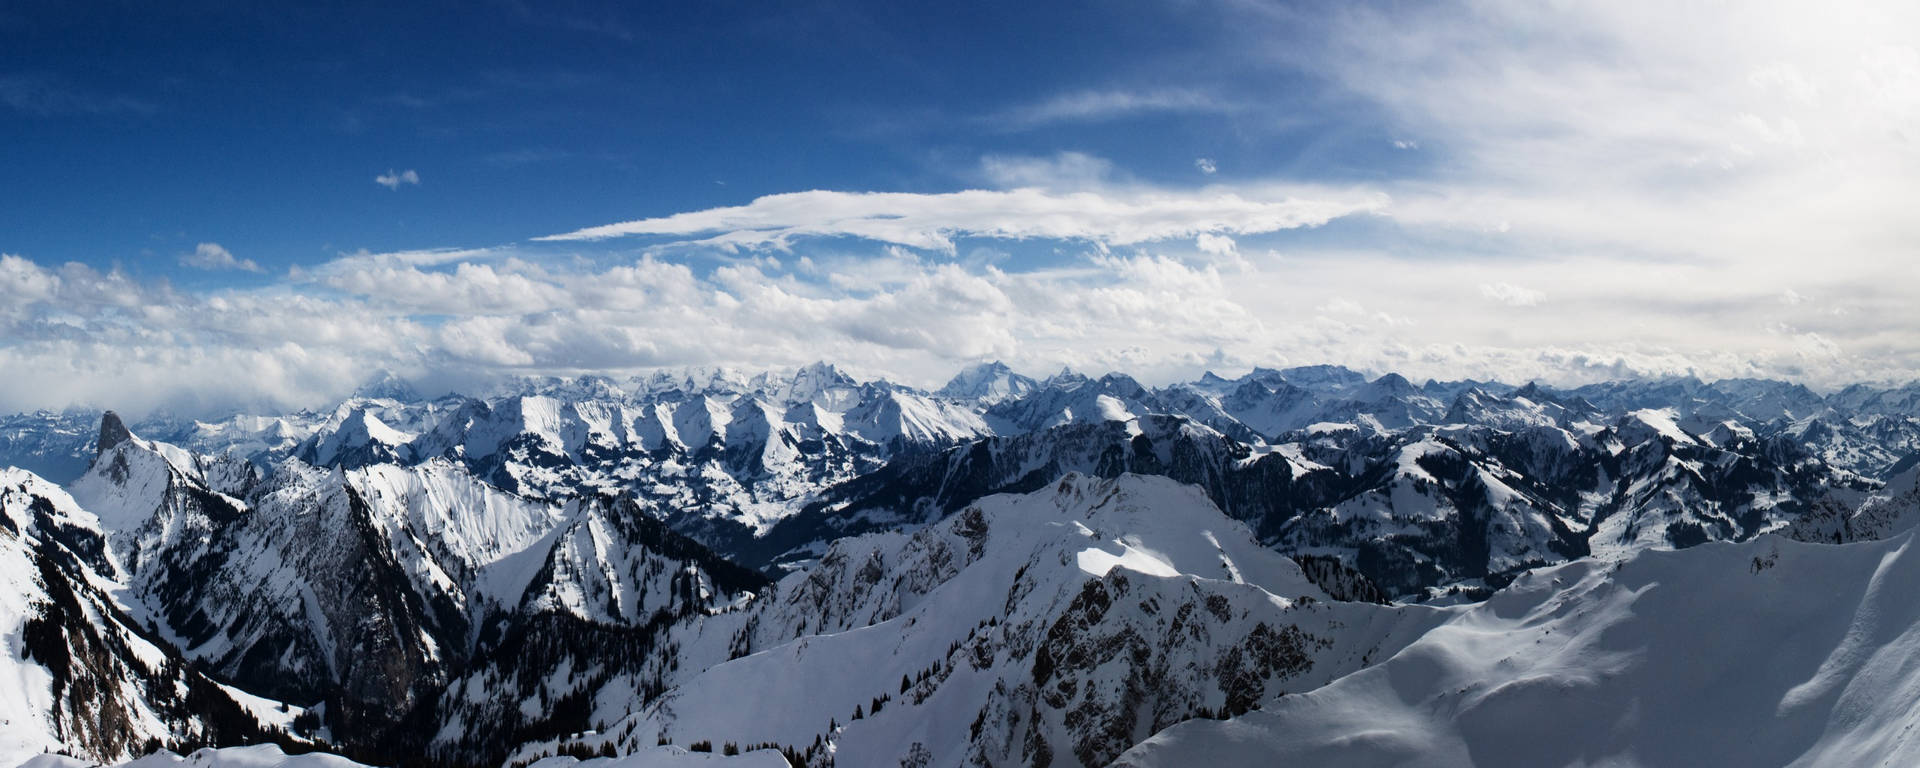 High Resolution Dual Monitor Alps